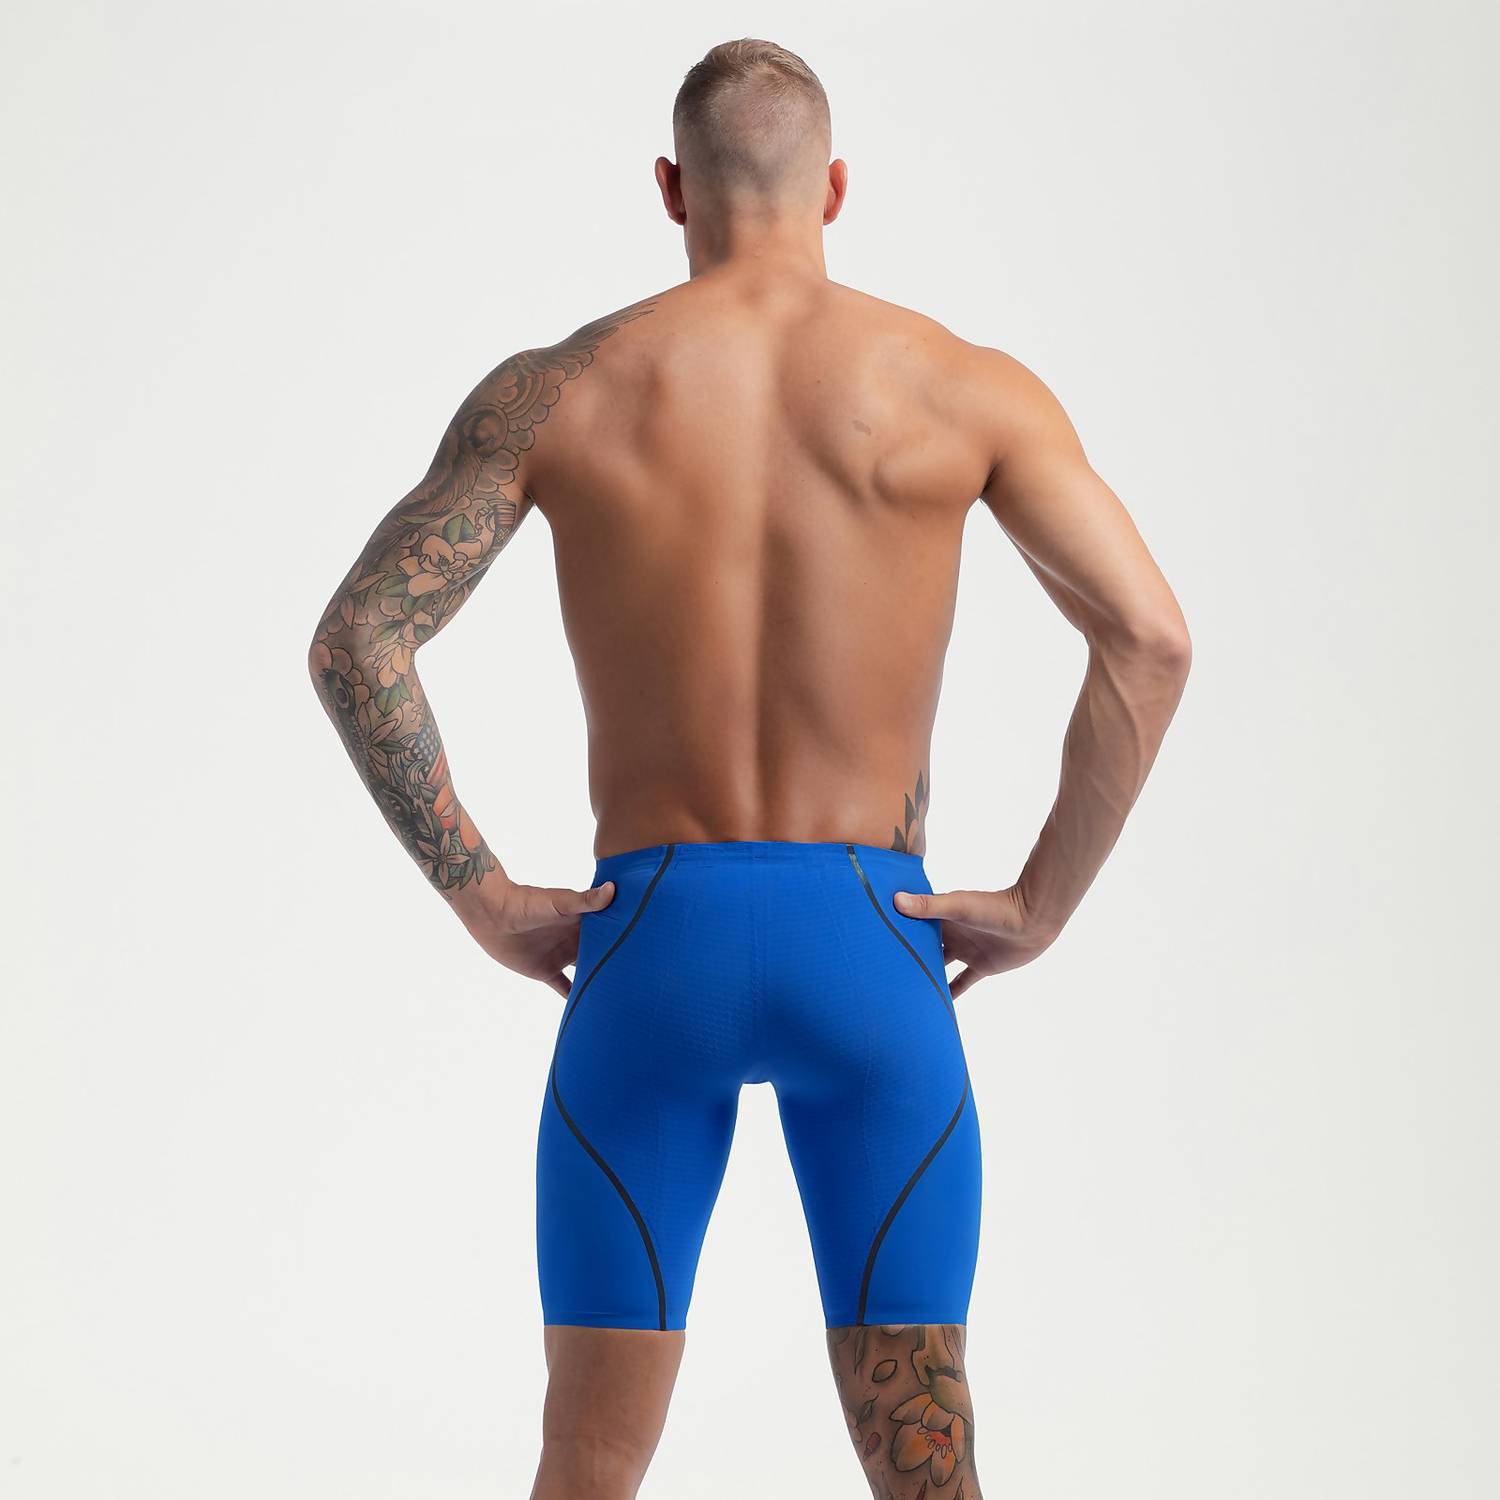 Jammer Taille Haute Homme Fastskin Lzr Pure Intent 2.0 Bleu/Irisé Compétition Hommes Speedo – 2